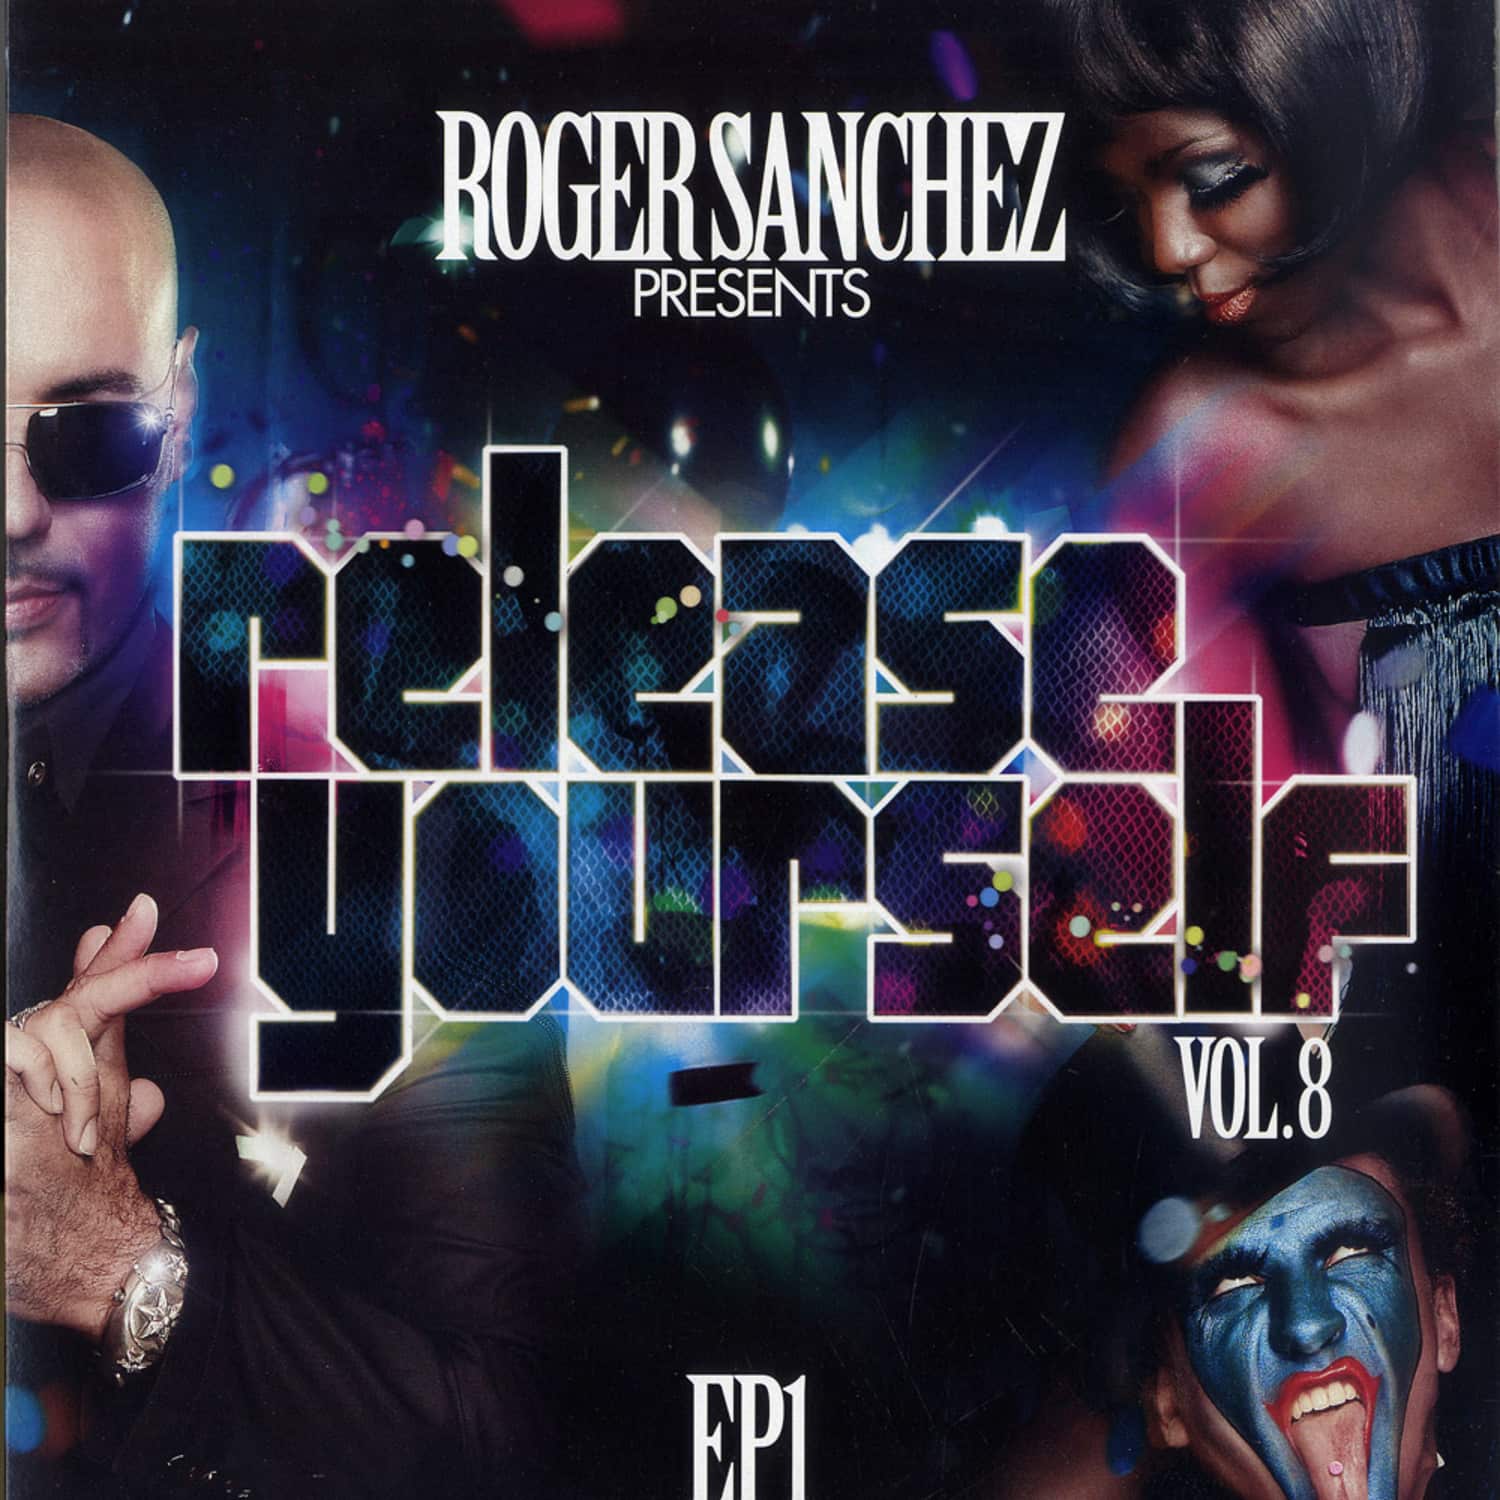 Roger Sanchez - RELEASE YOURSELF 8 EP 1